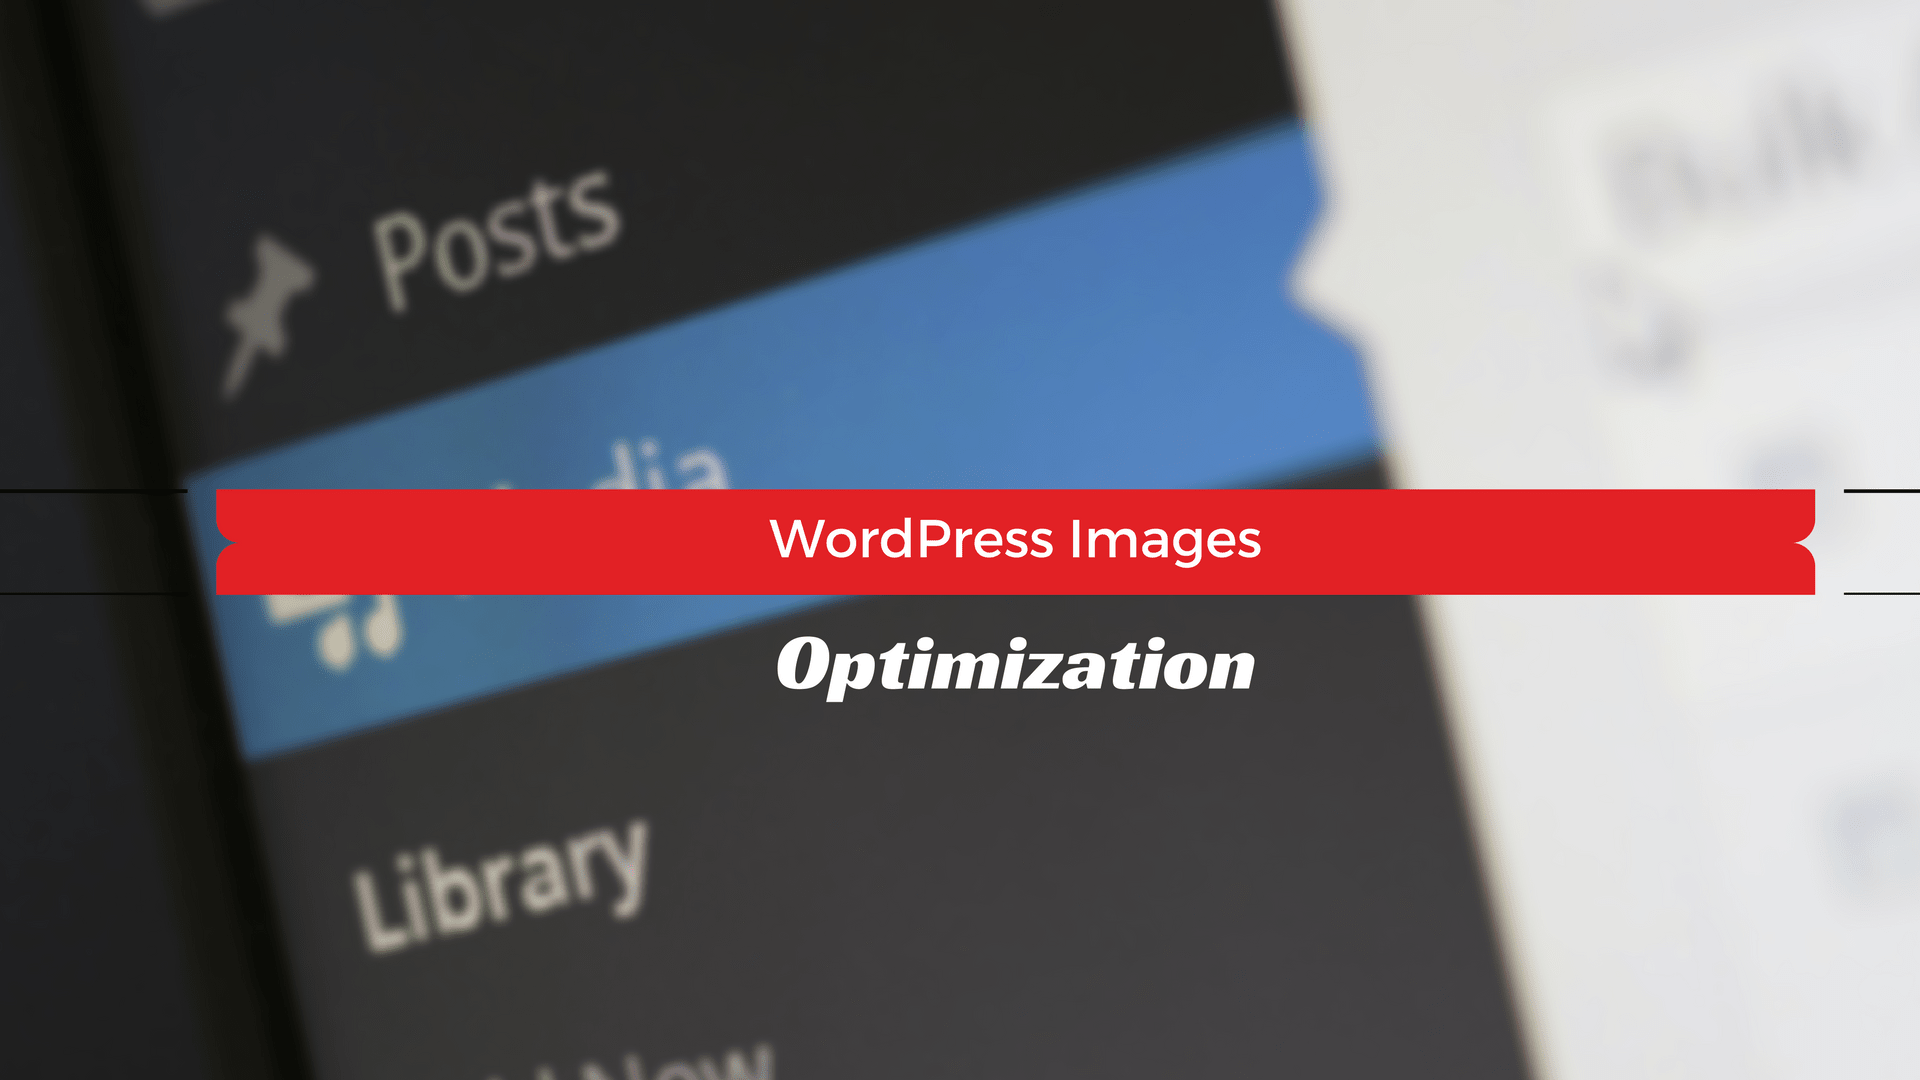 optimize images wordpress